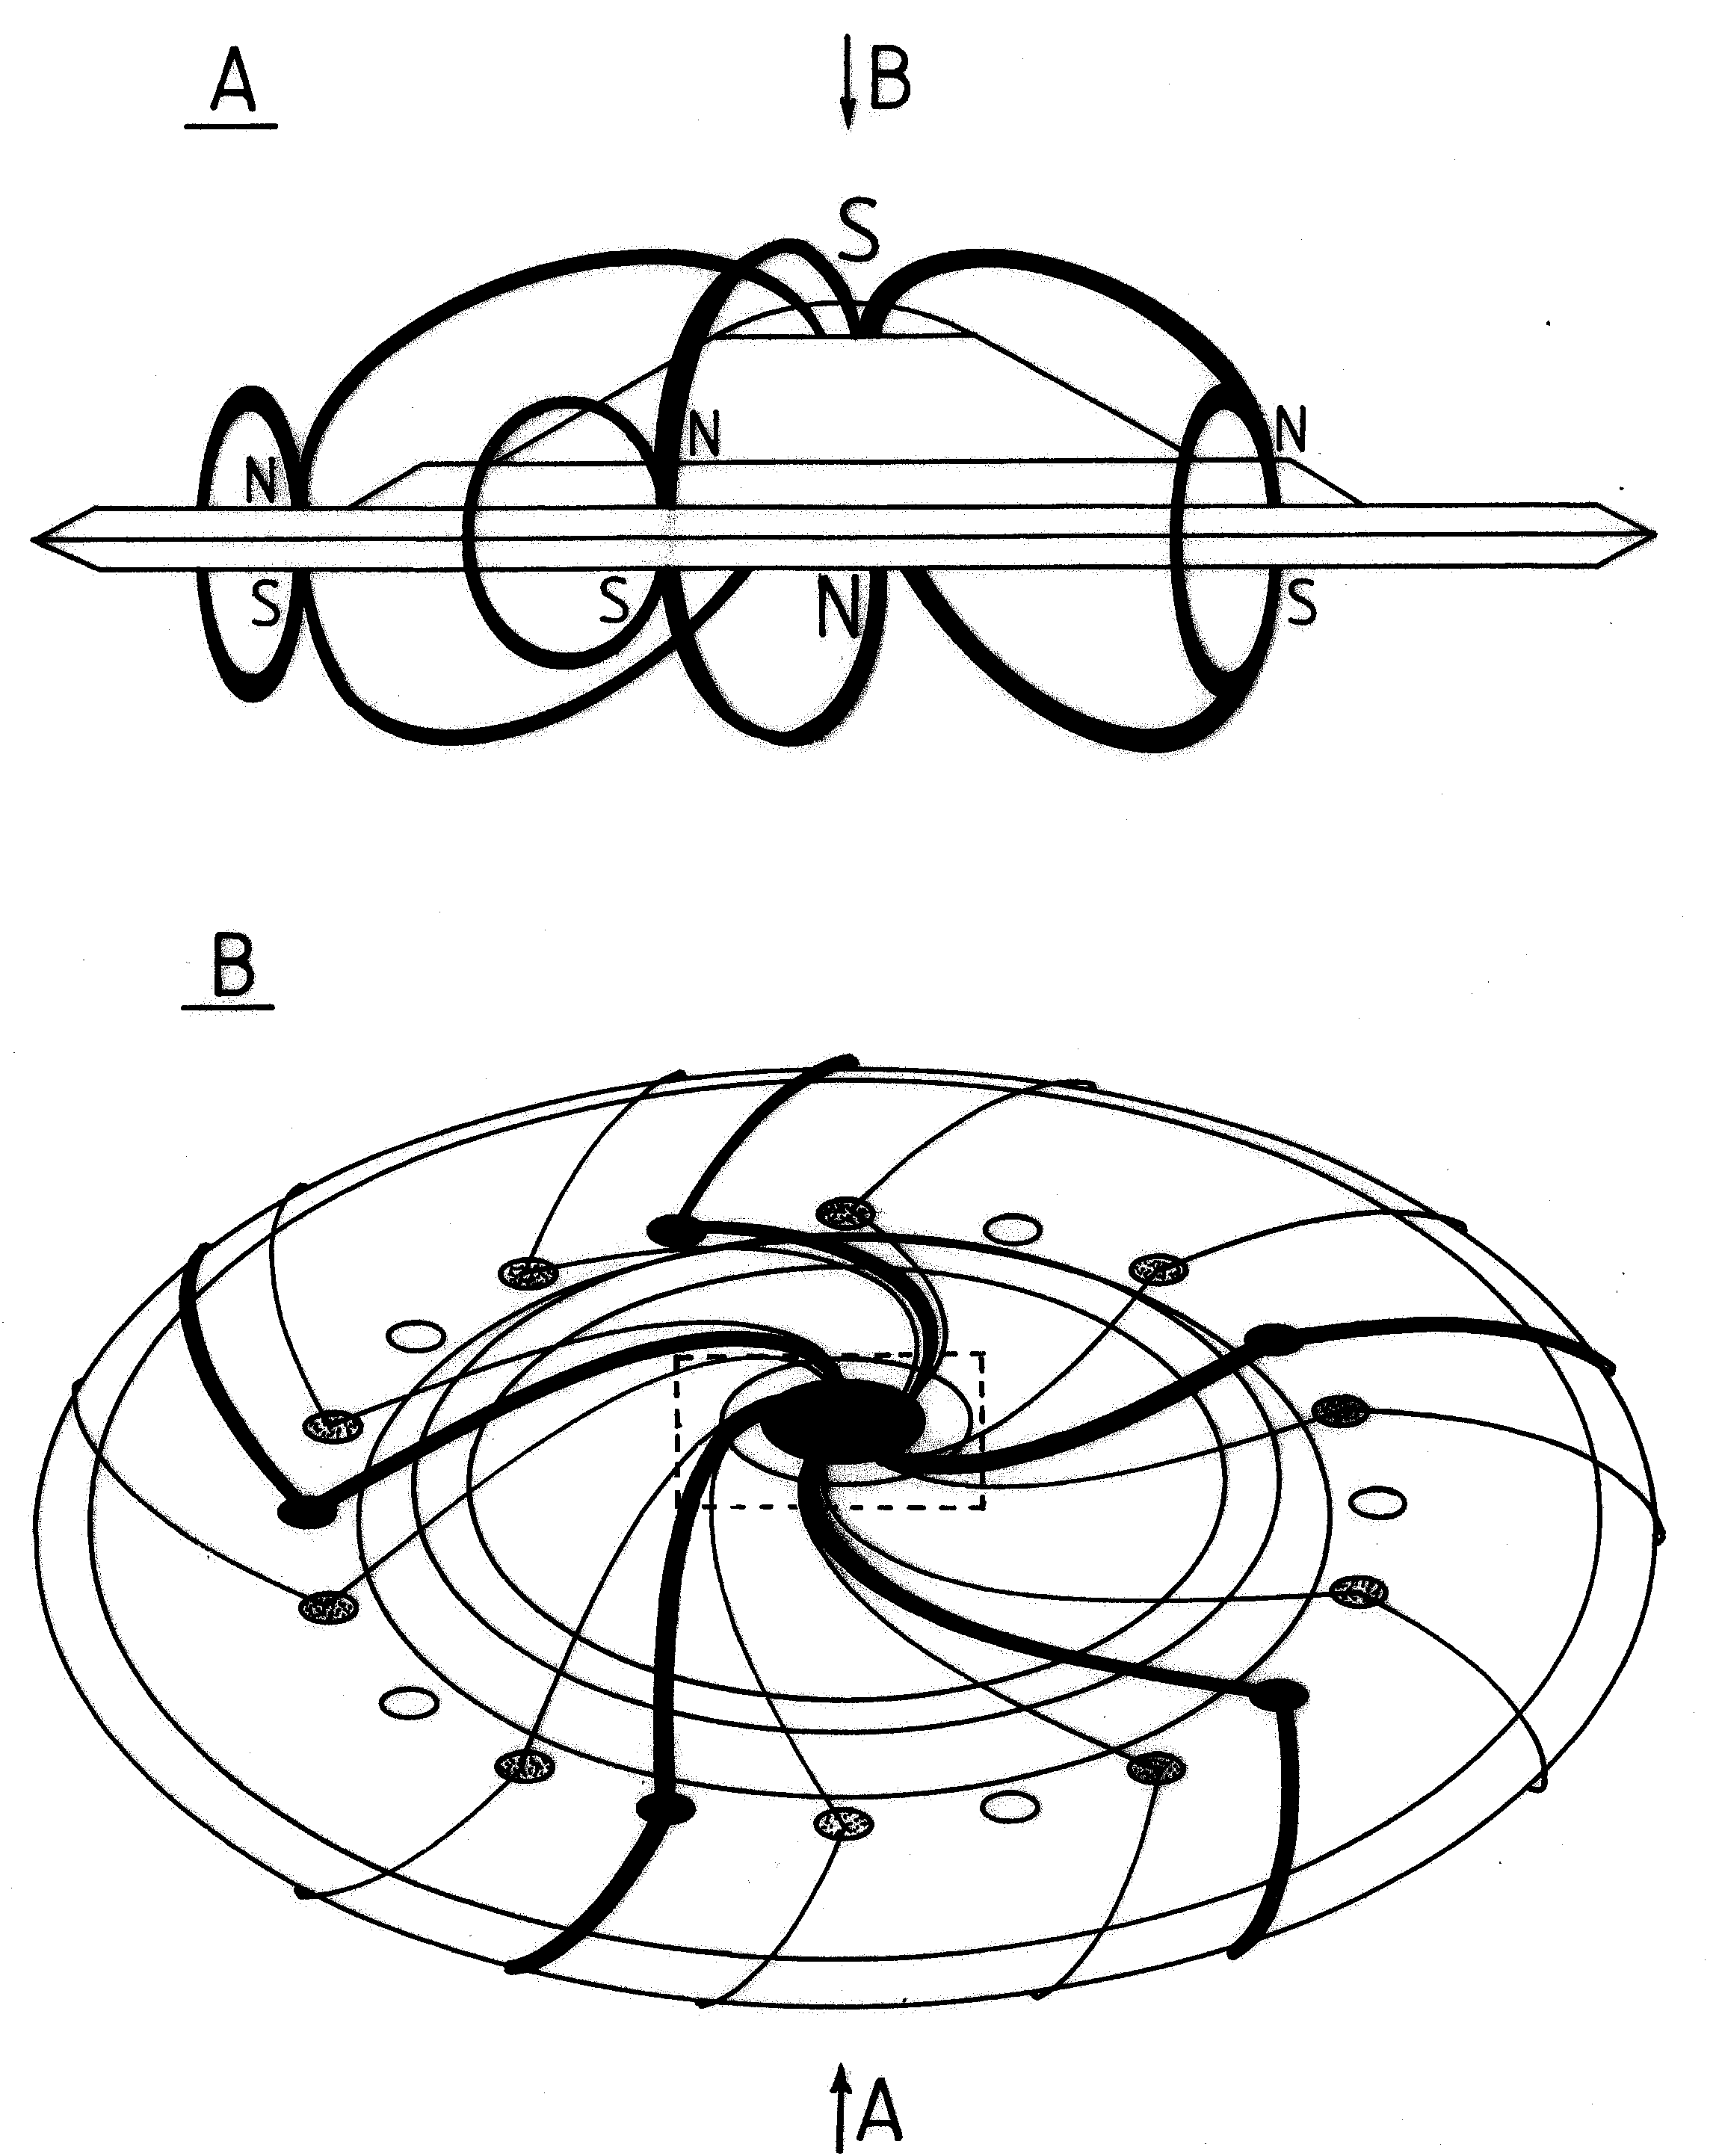 Fig./Rys. P19(ab) in/w [1/4]